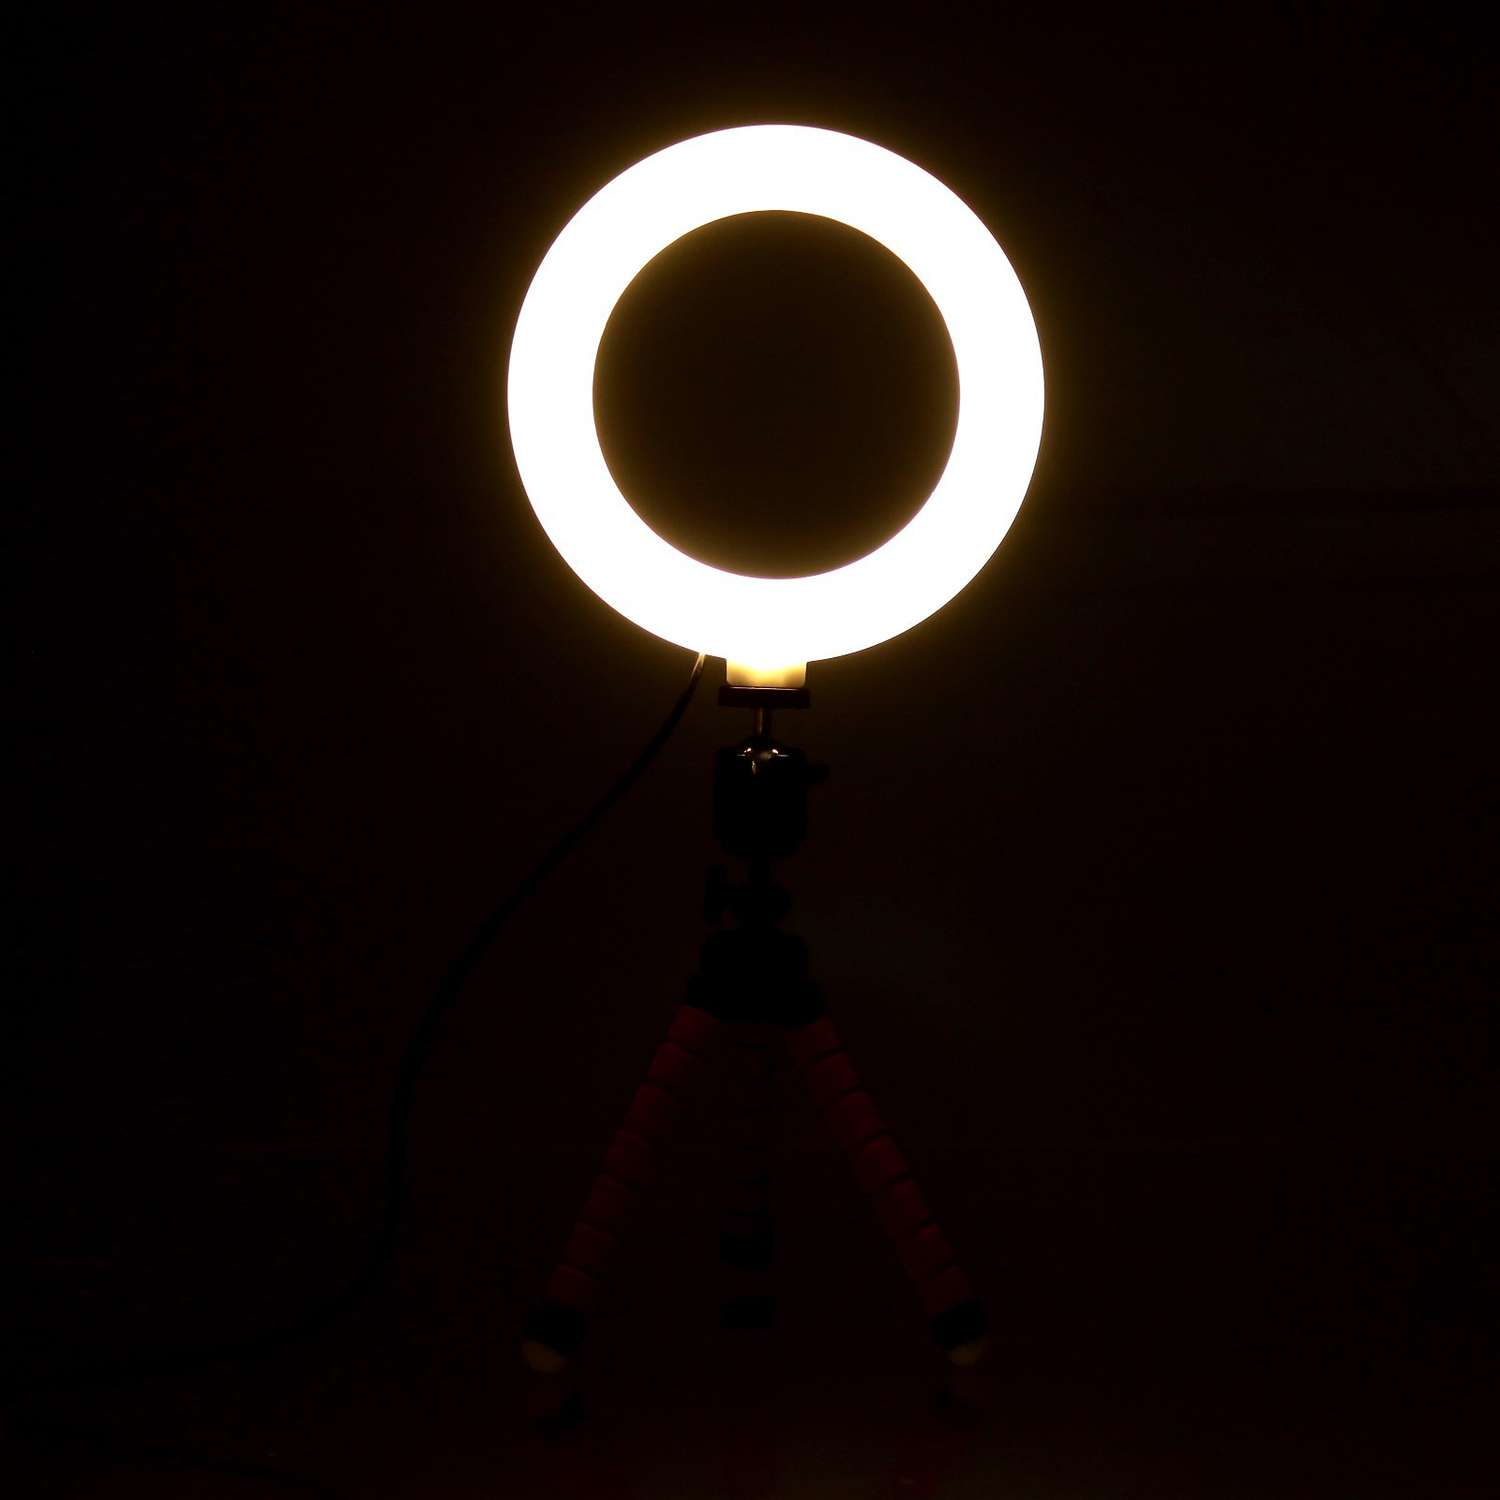 Кольцевая лампа Школа Талантов набор для съёмок видео - фото 11